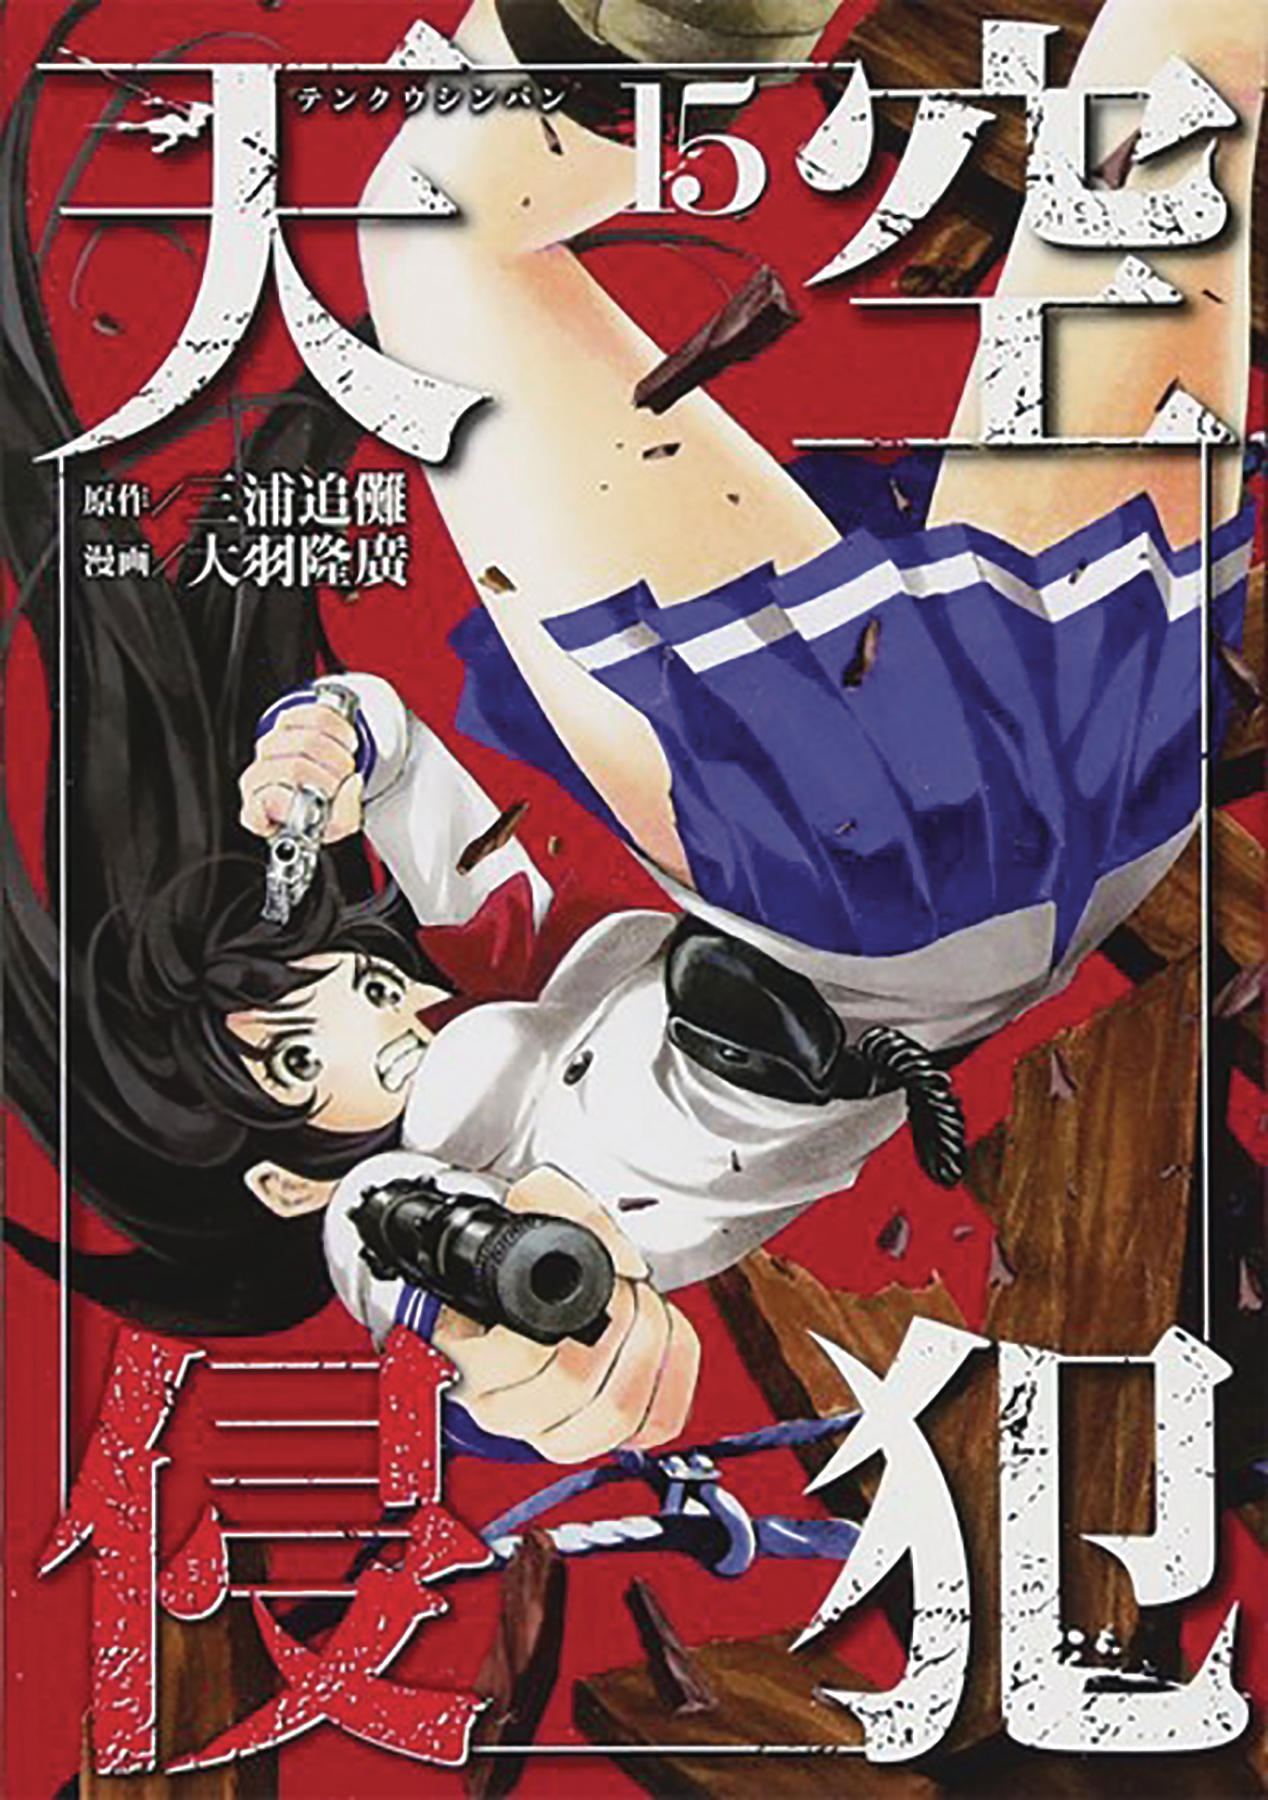 High Rise Invasion Manga Volume 8 (Collects Volume 15 & 16) (Mature)